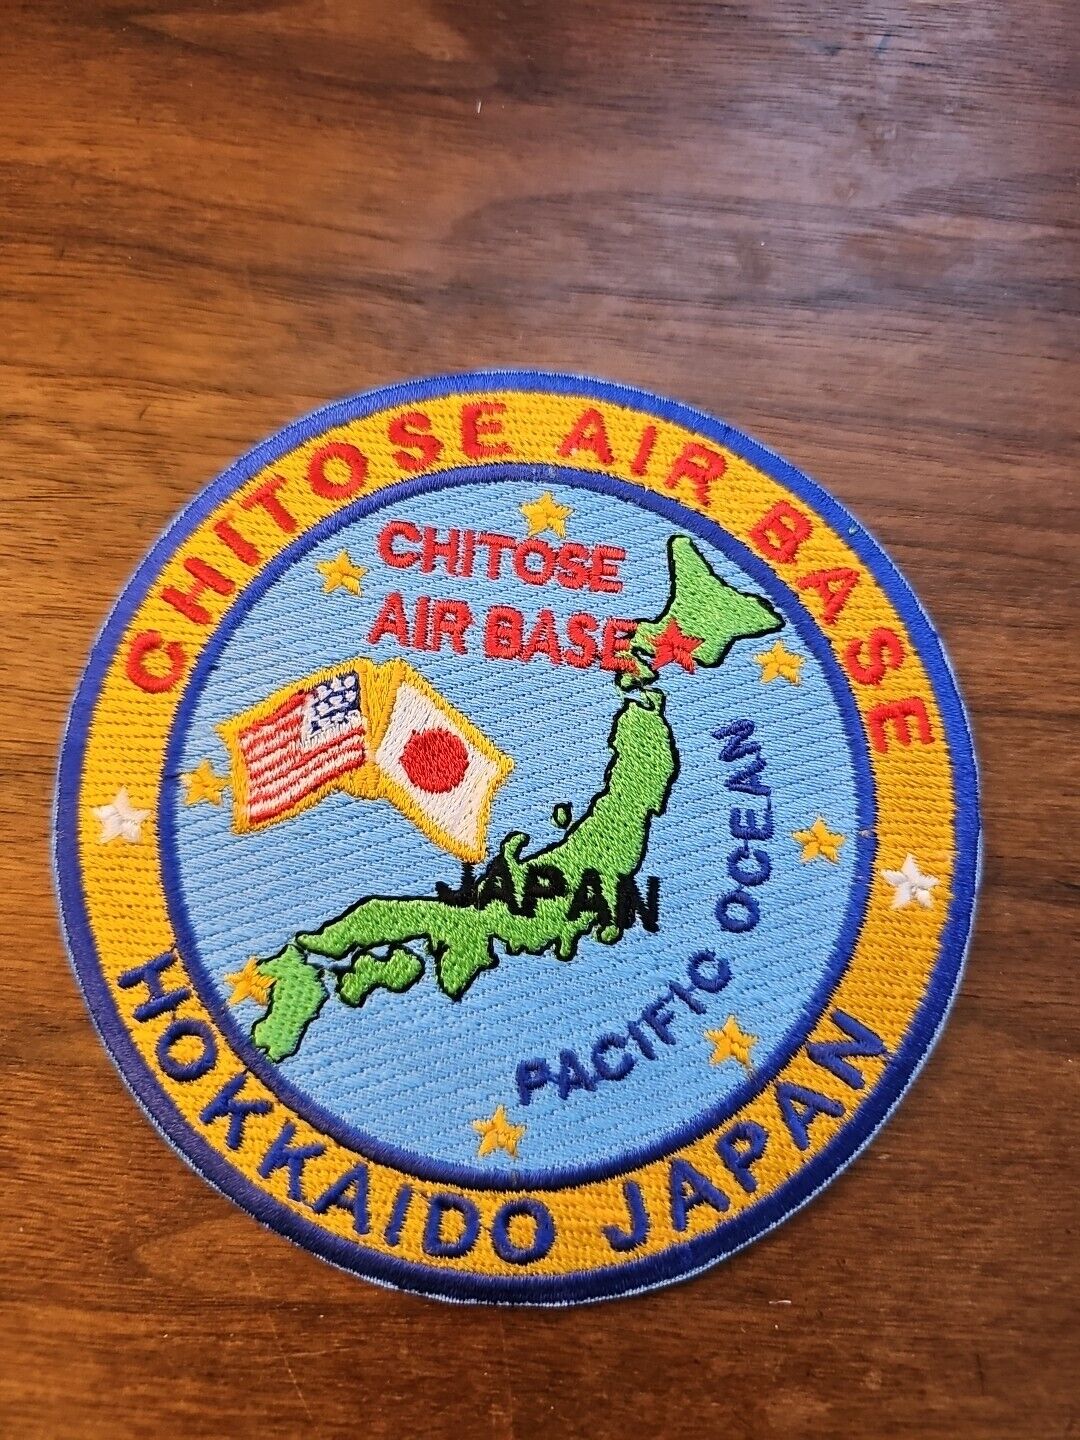 CHITOSE AIR BASE, HOKKAIDO, JAPAN